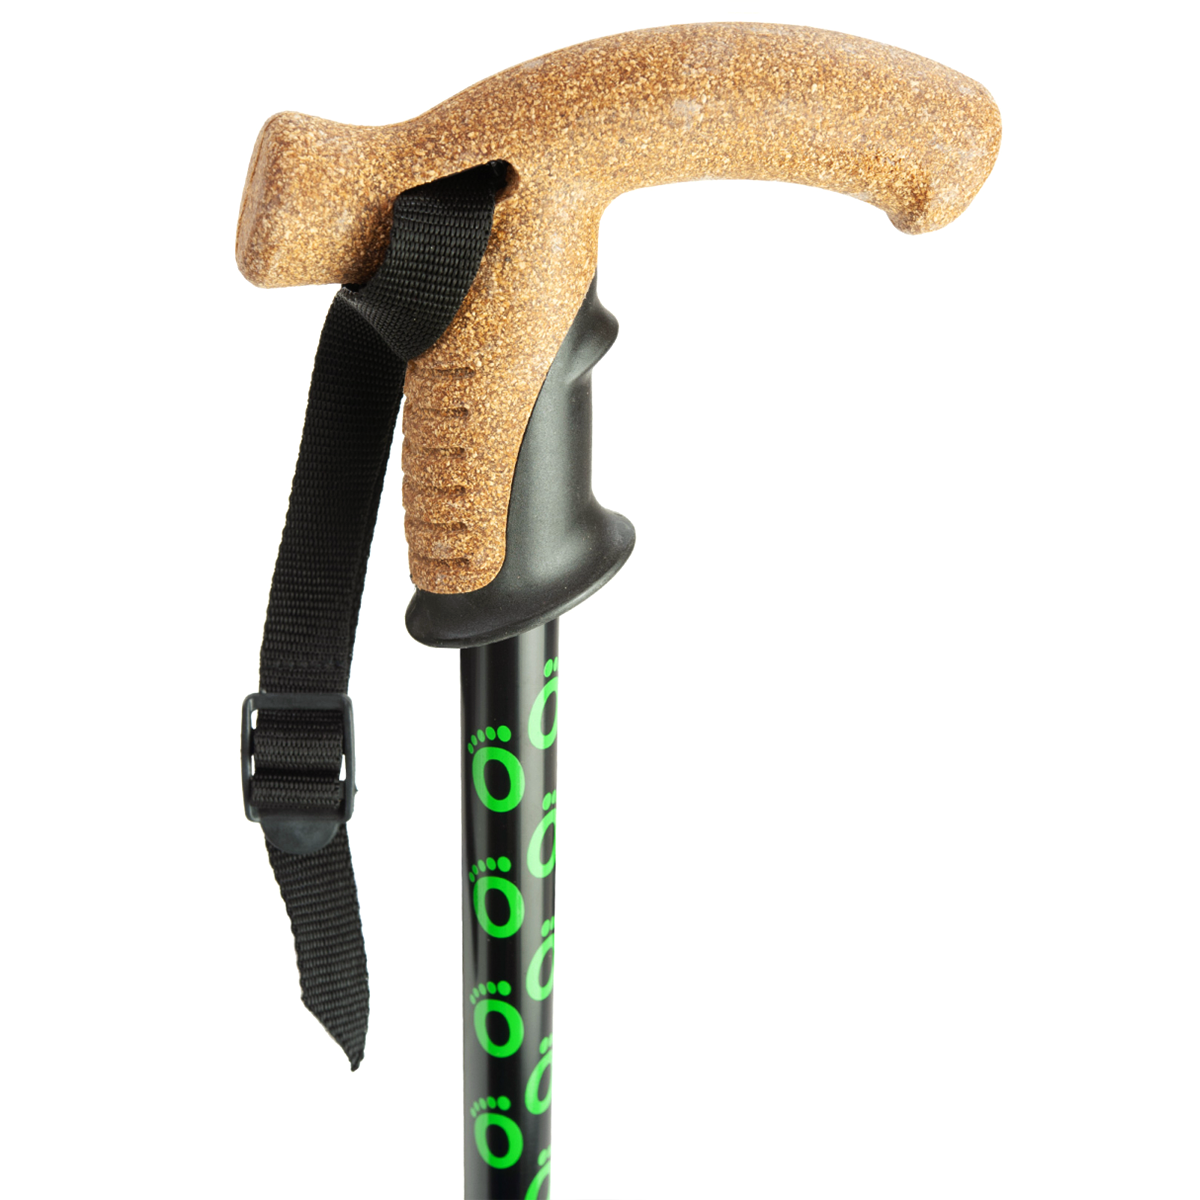 The cork handle of a black Flexyfoot Premium Cork Handle Walking Stick